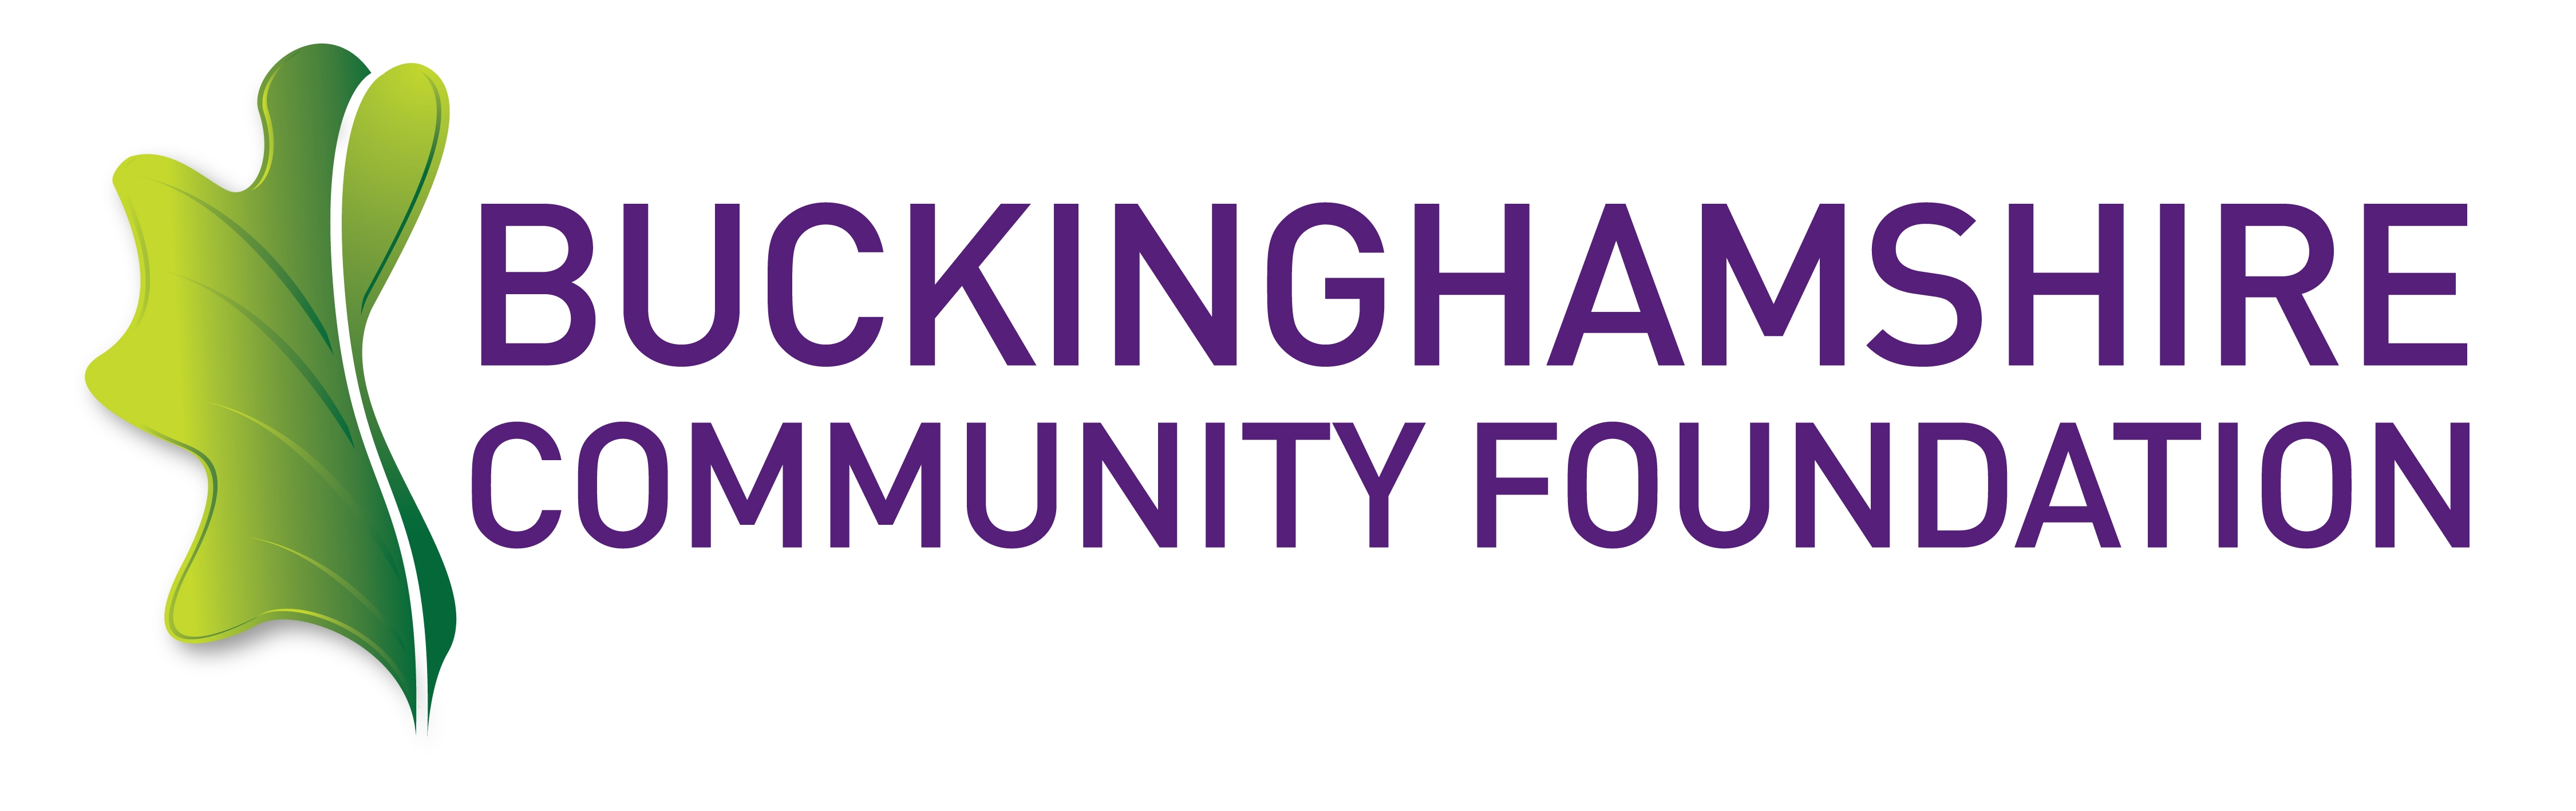 Buckinghamshire Foundation logo